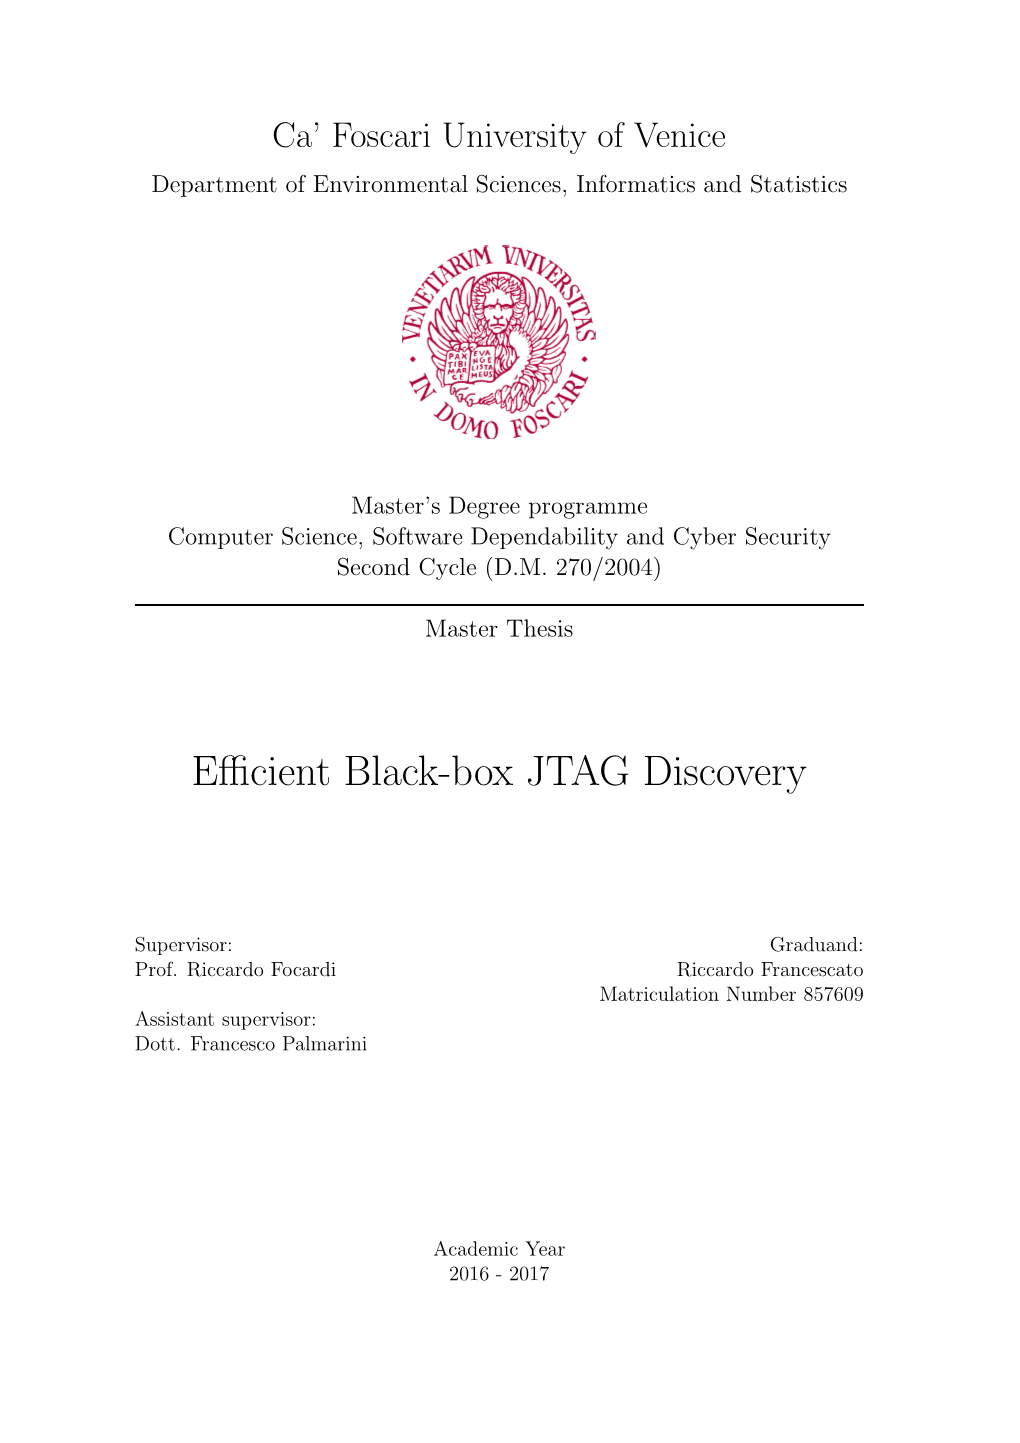 Efficient Black-Box JTAG Discovery